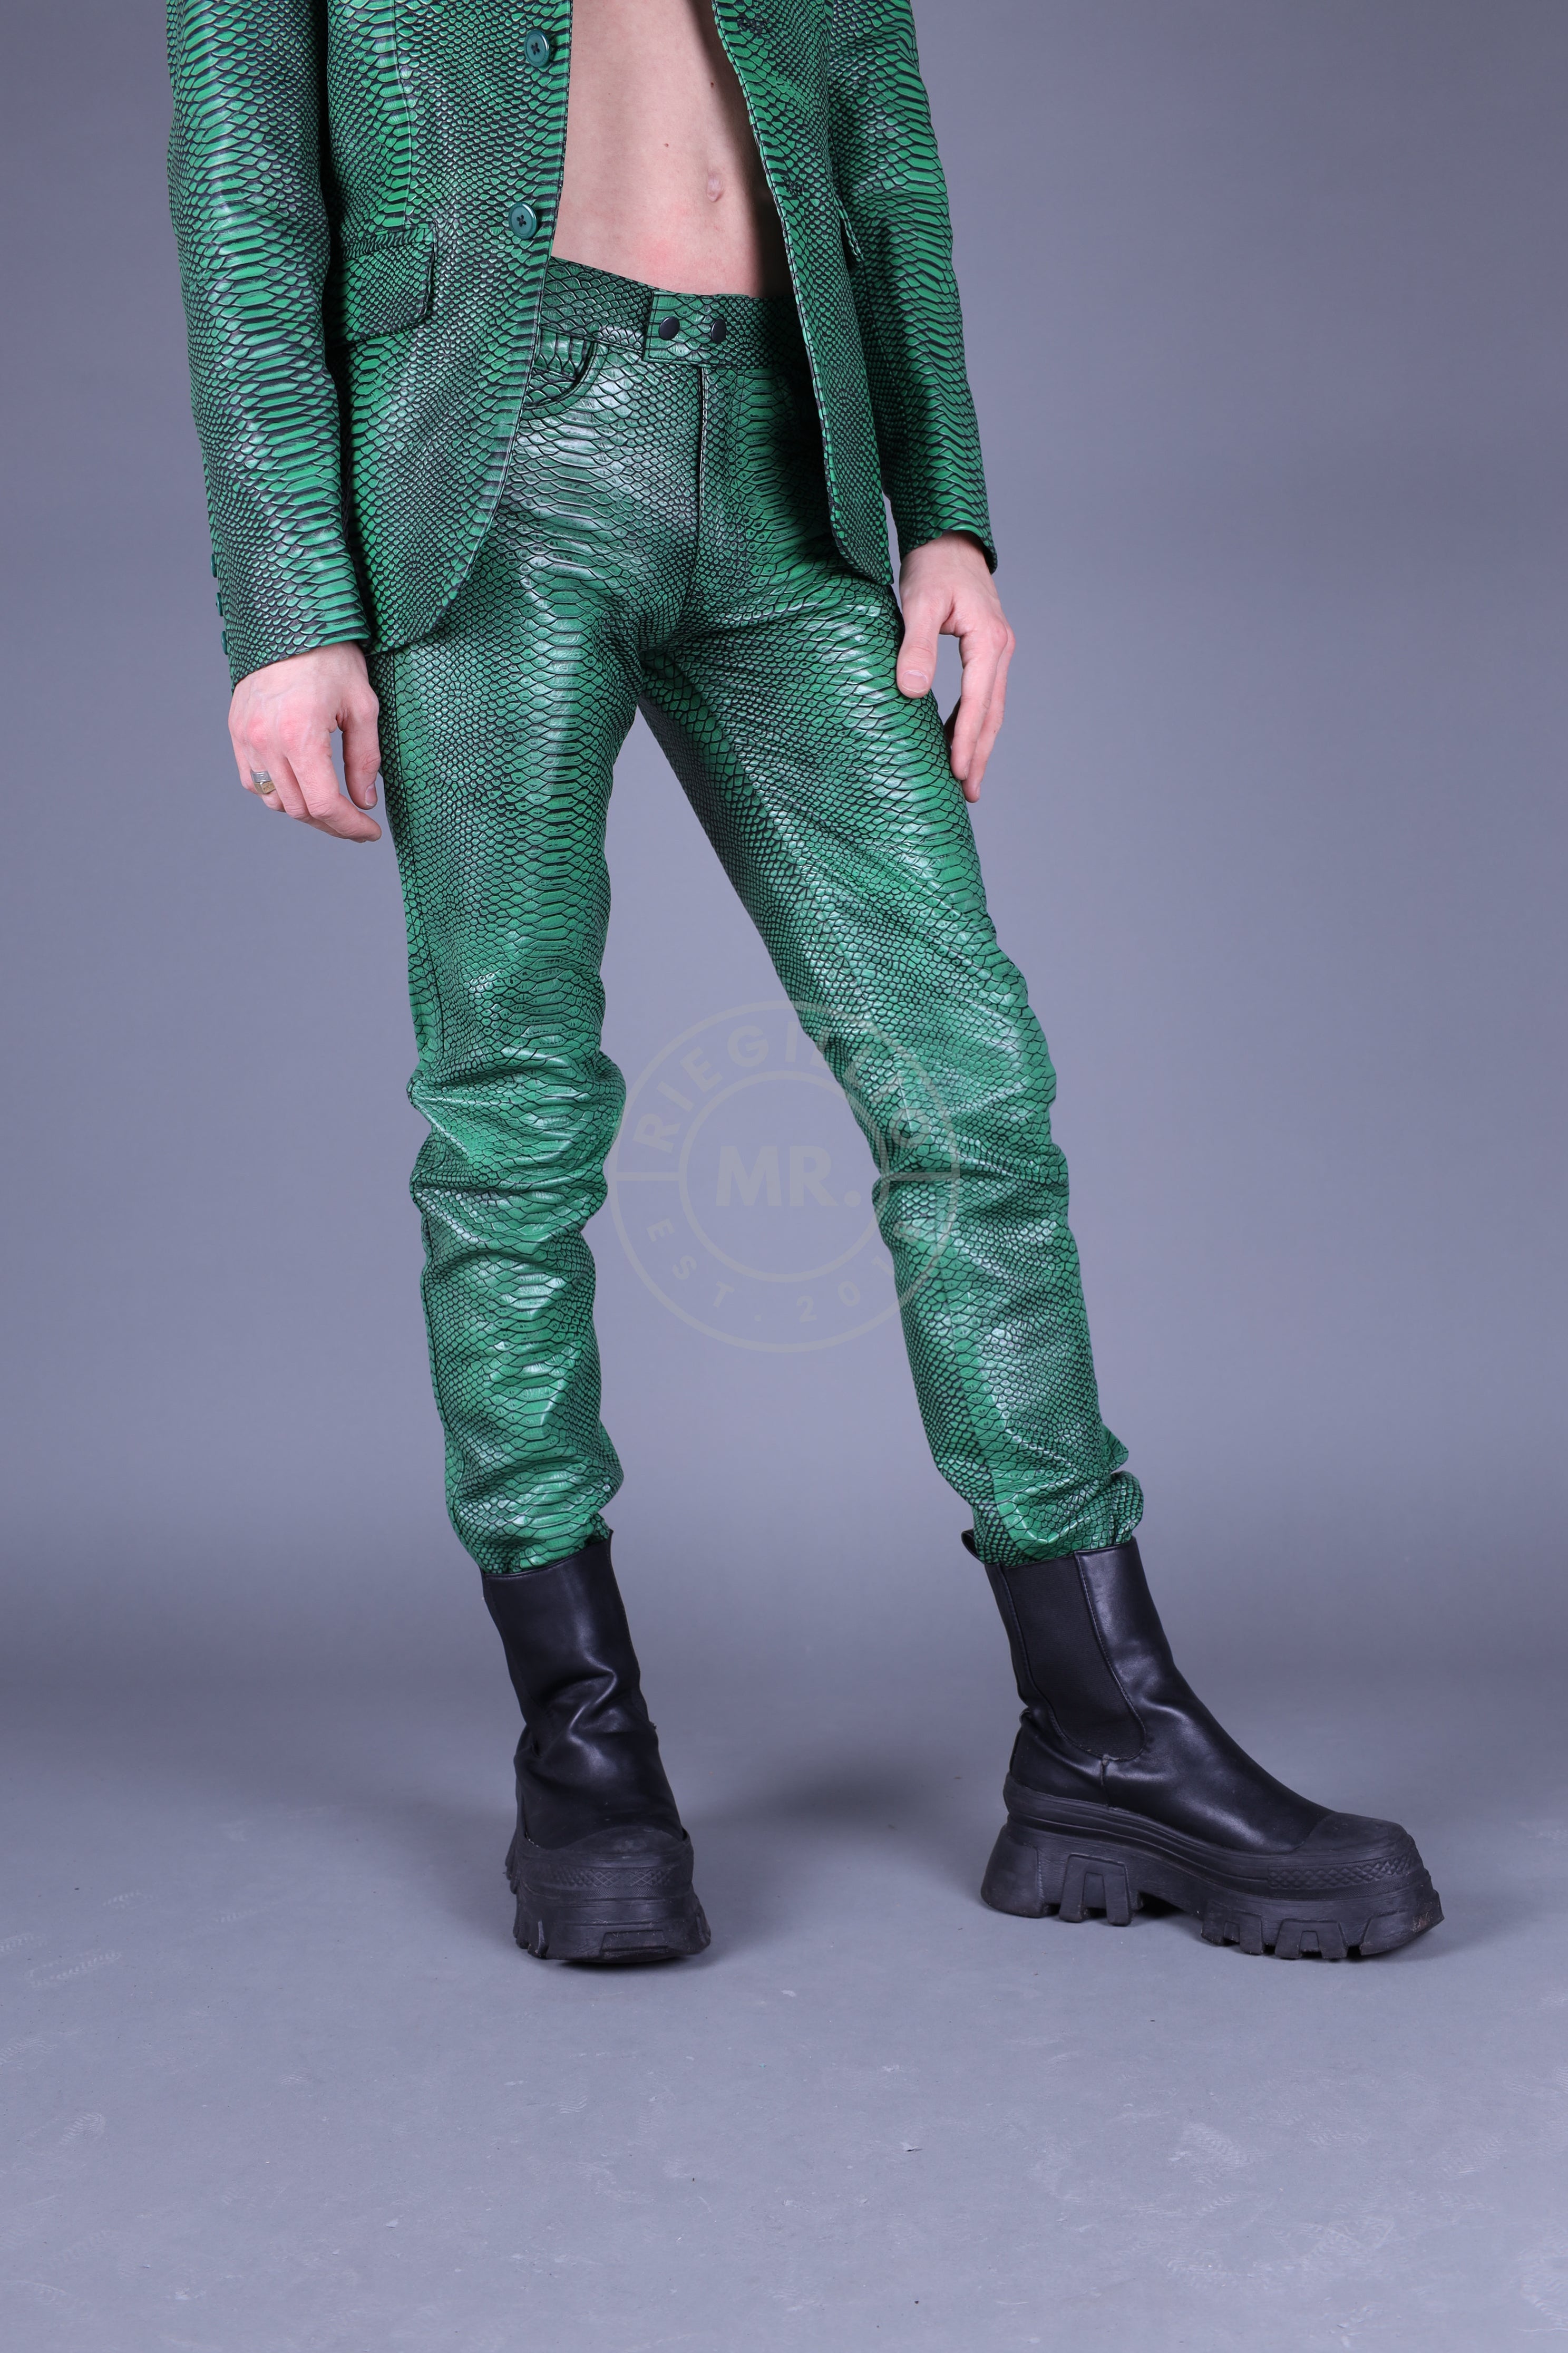 Green Leather Snake Pants-at MR. Riegillio